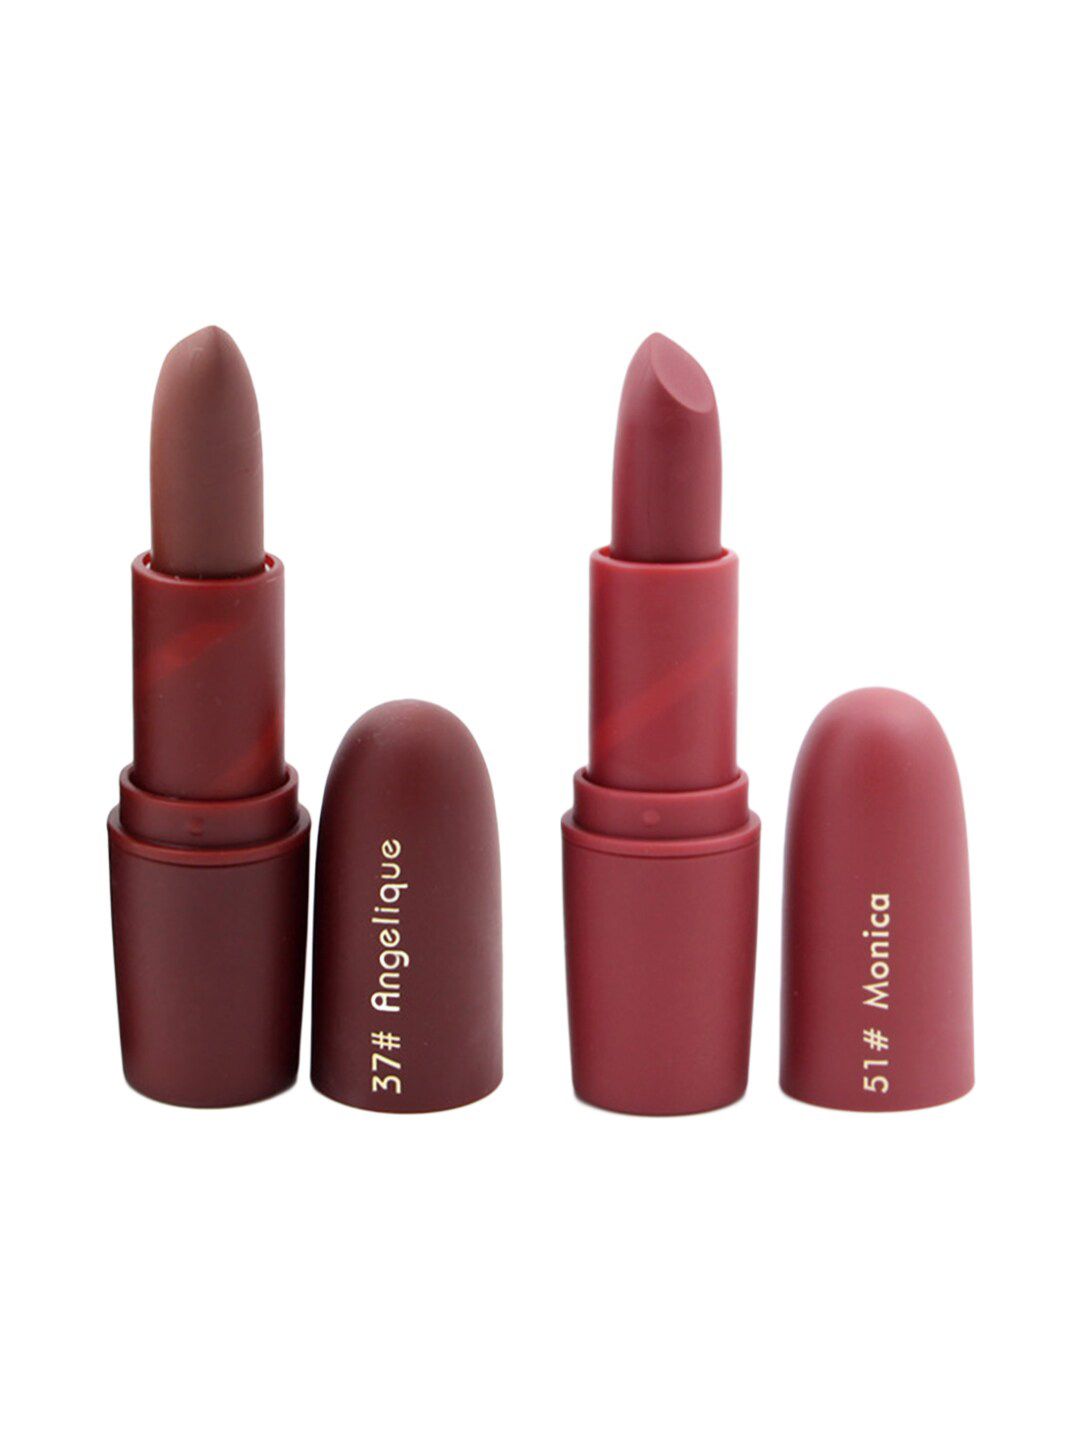 MISS ROSE Set of 2 Matte Creamy Lipsticks - Angelique 37 & Monica 51 Price in India